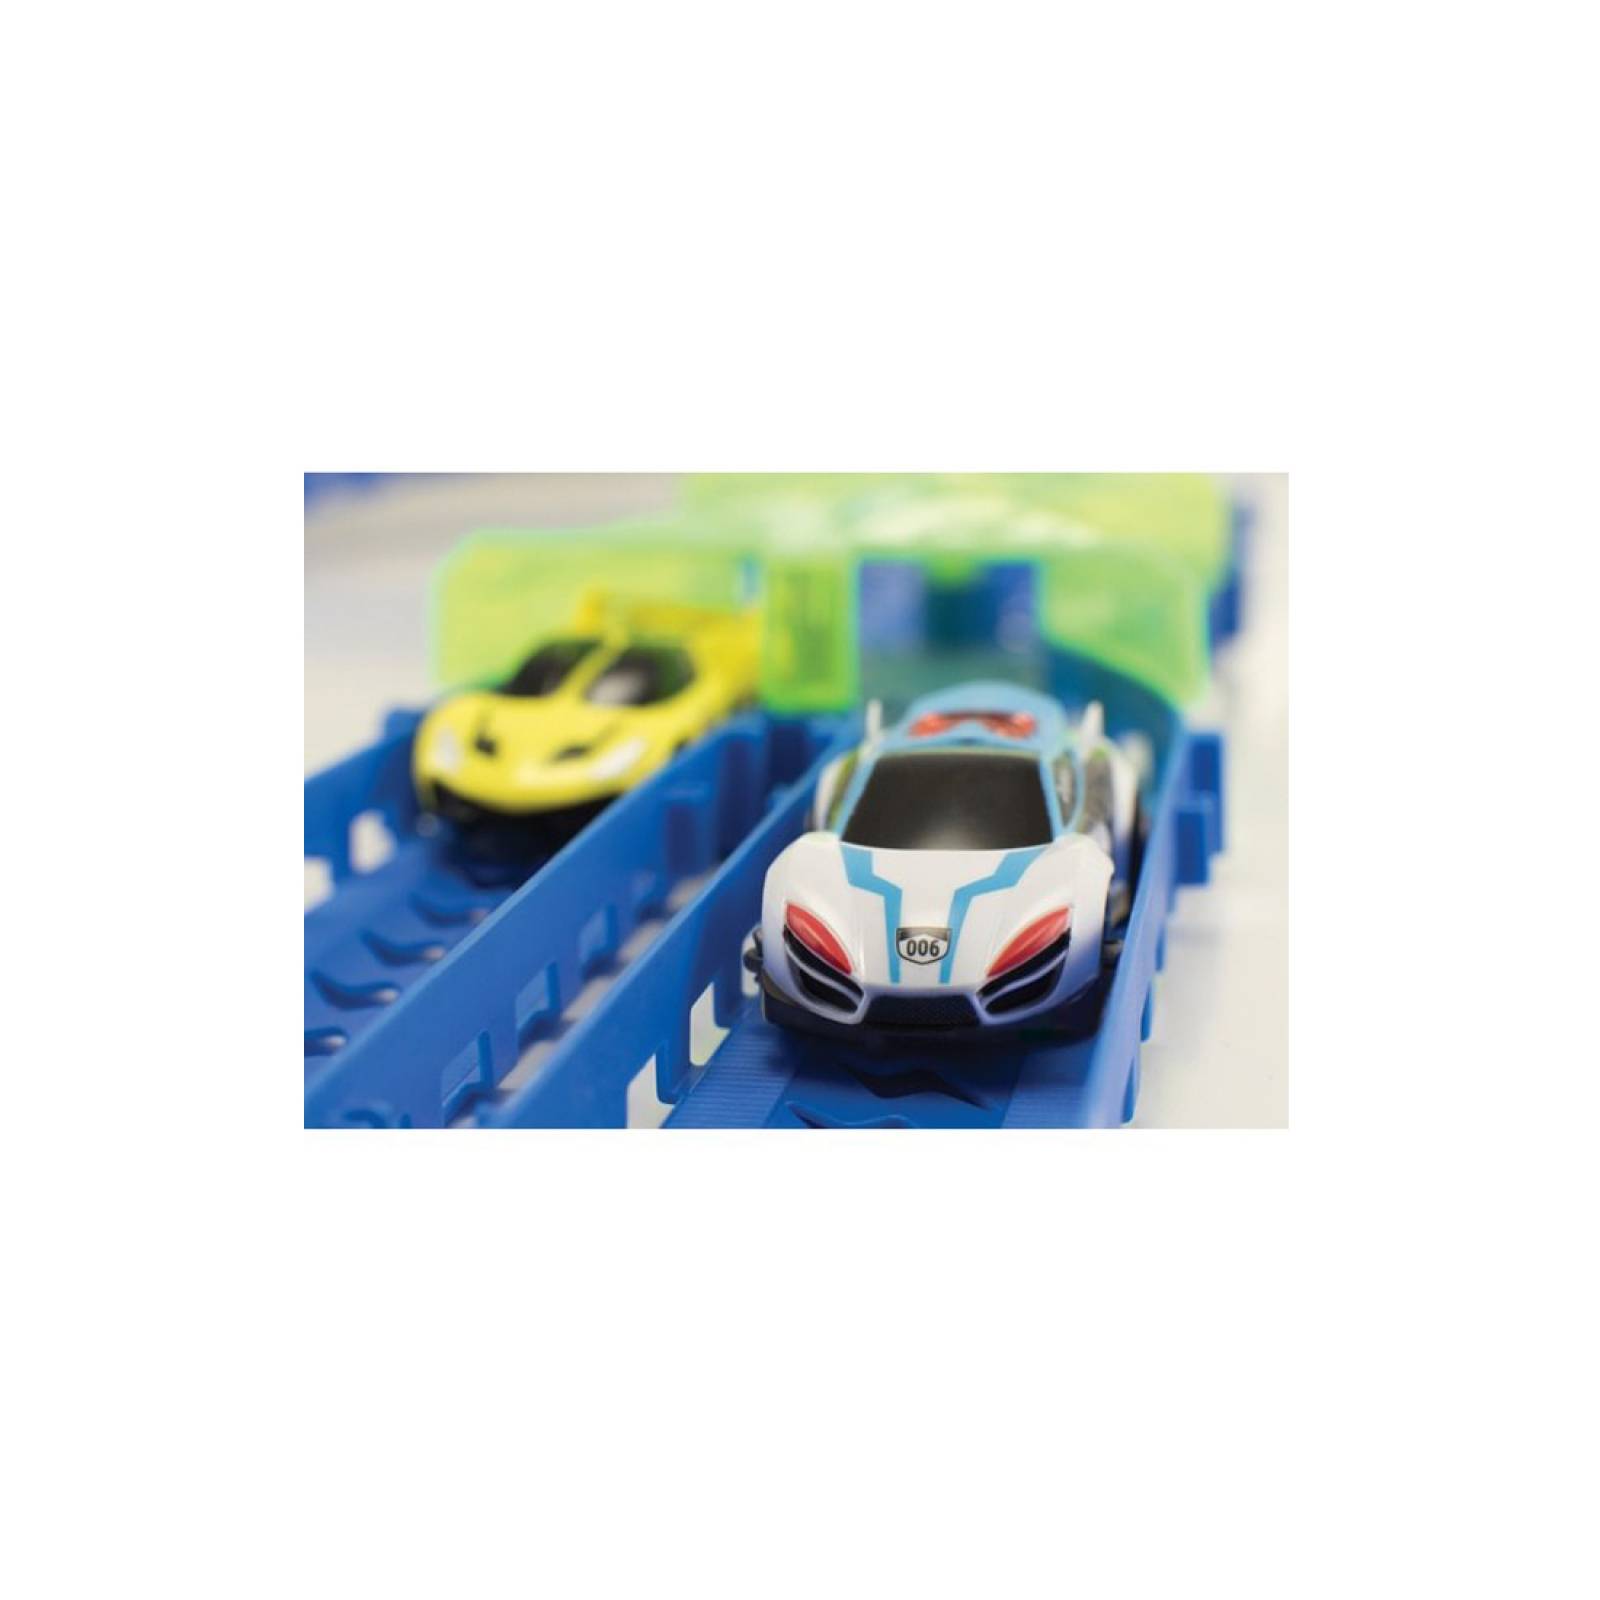 Pista de Autos Sensor de Onda Skyloop Rally Wave Racer Toys